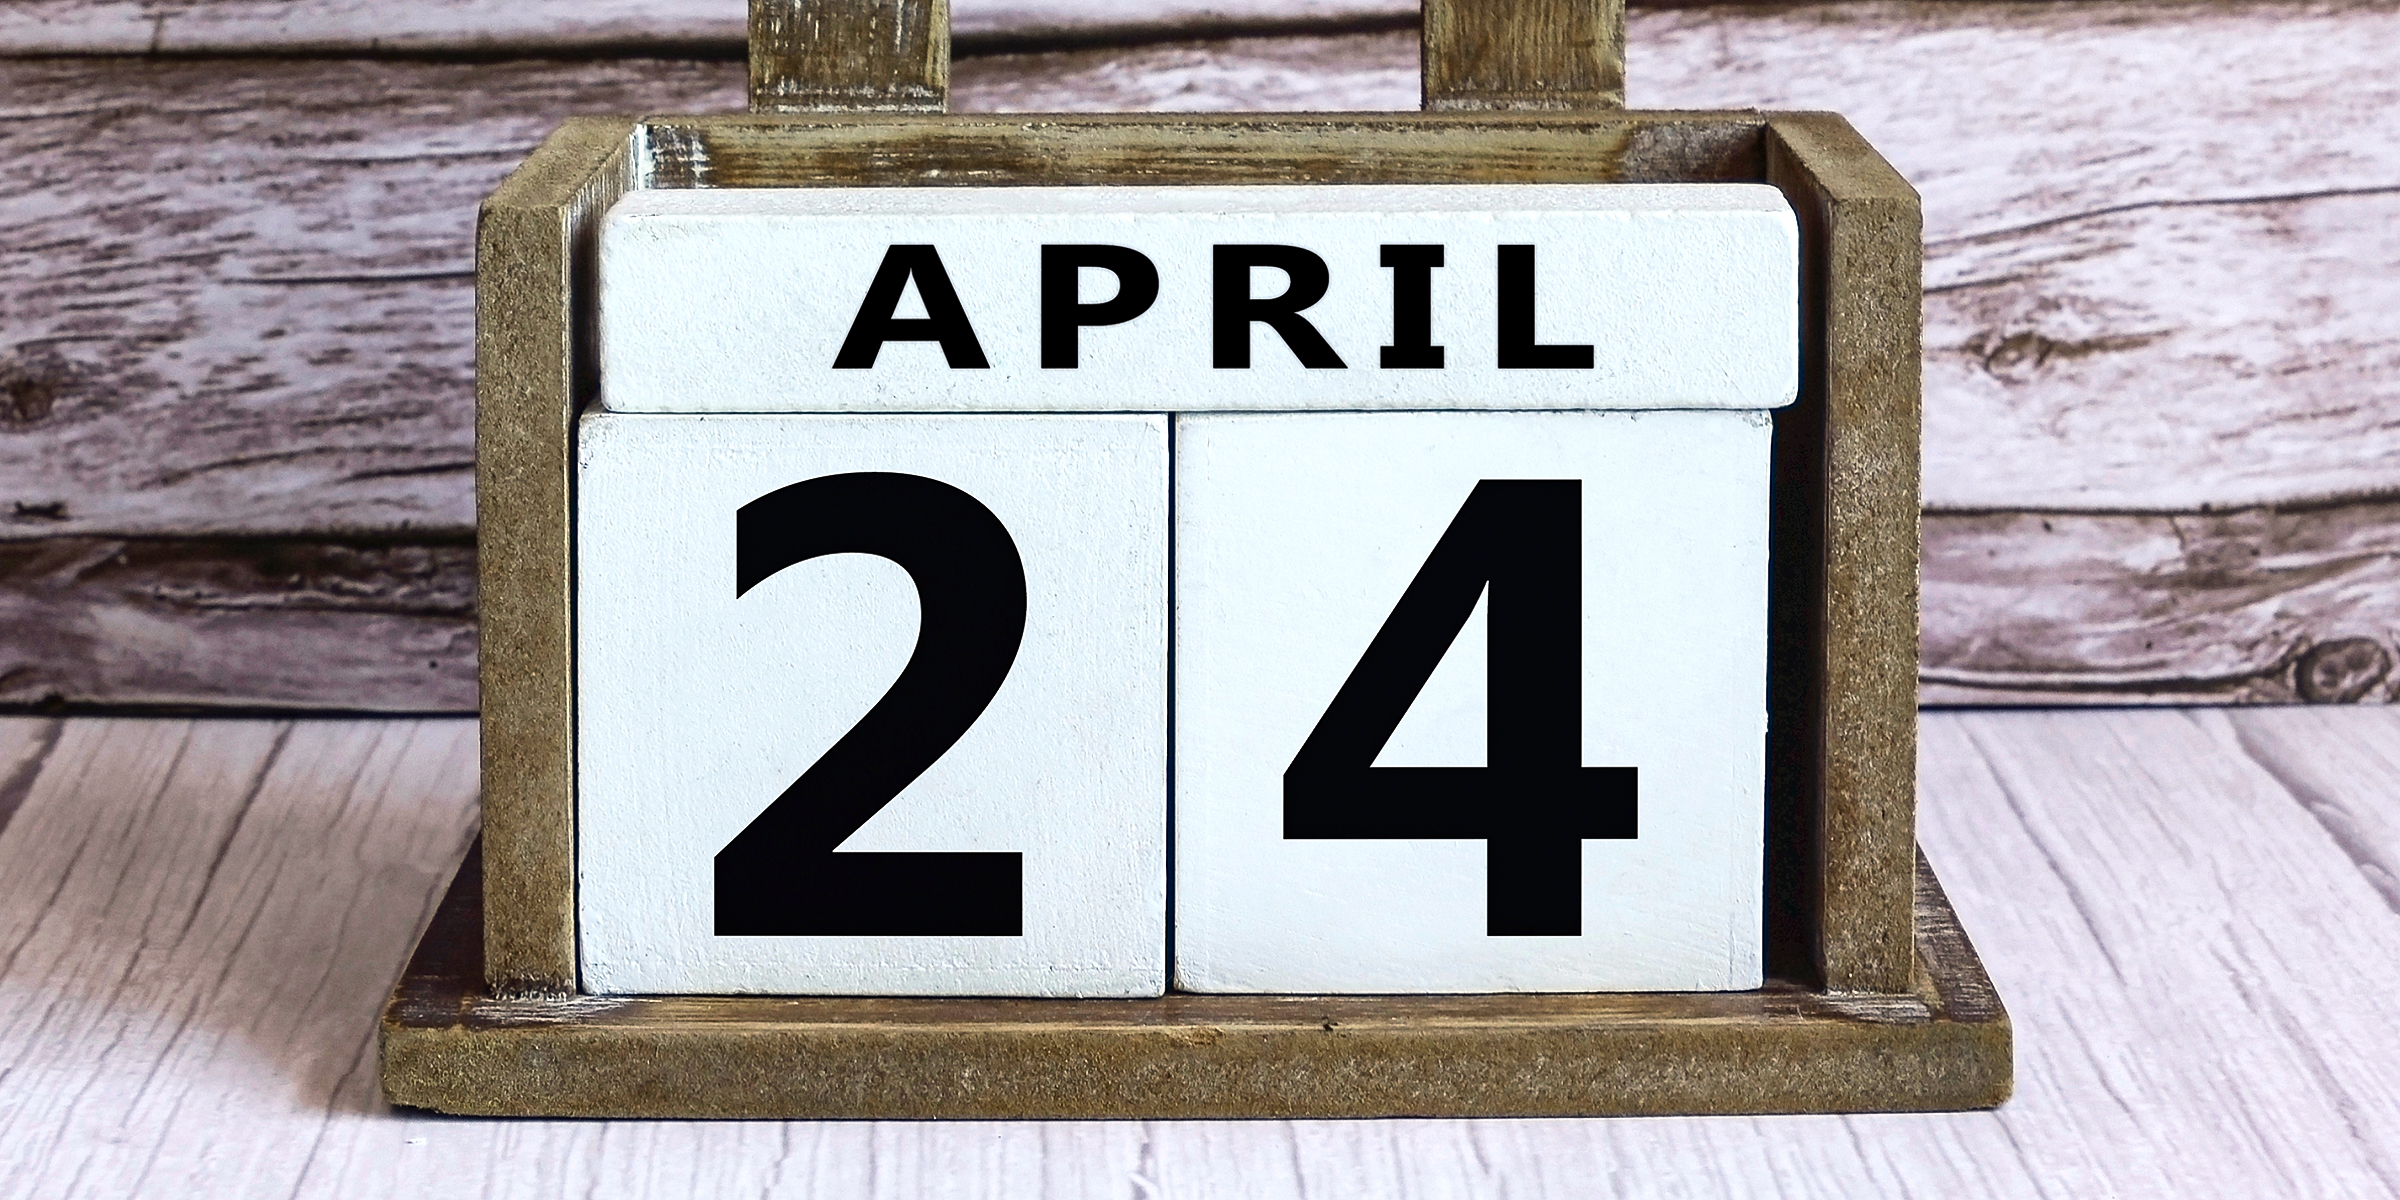 Calendar dated April 24th | Source: Shutterstock